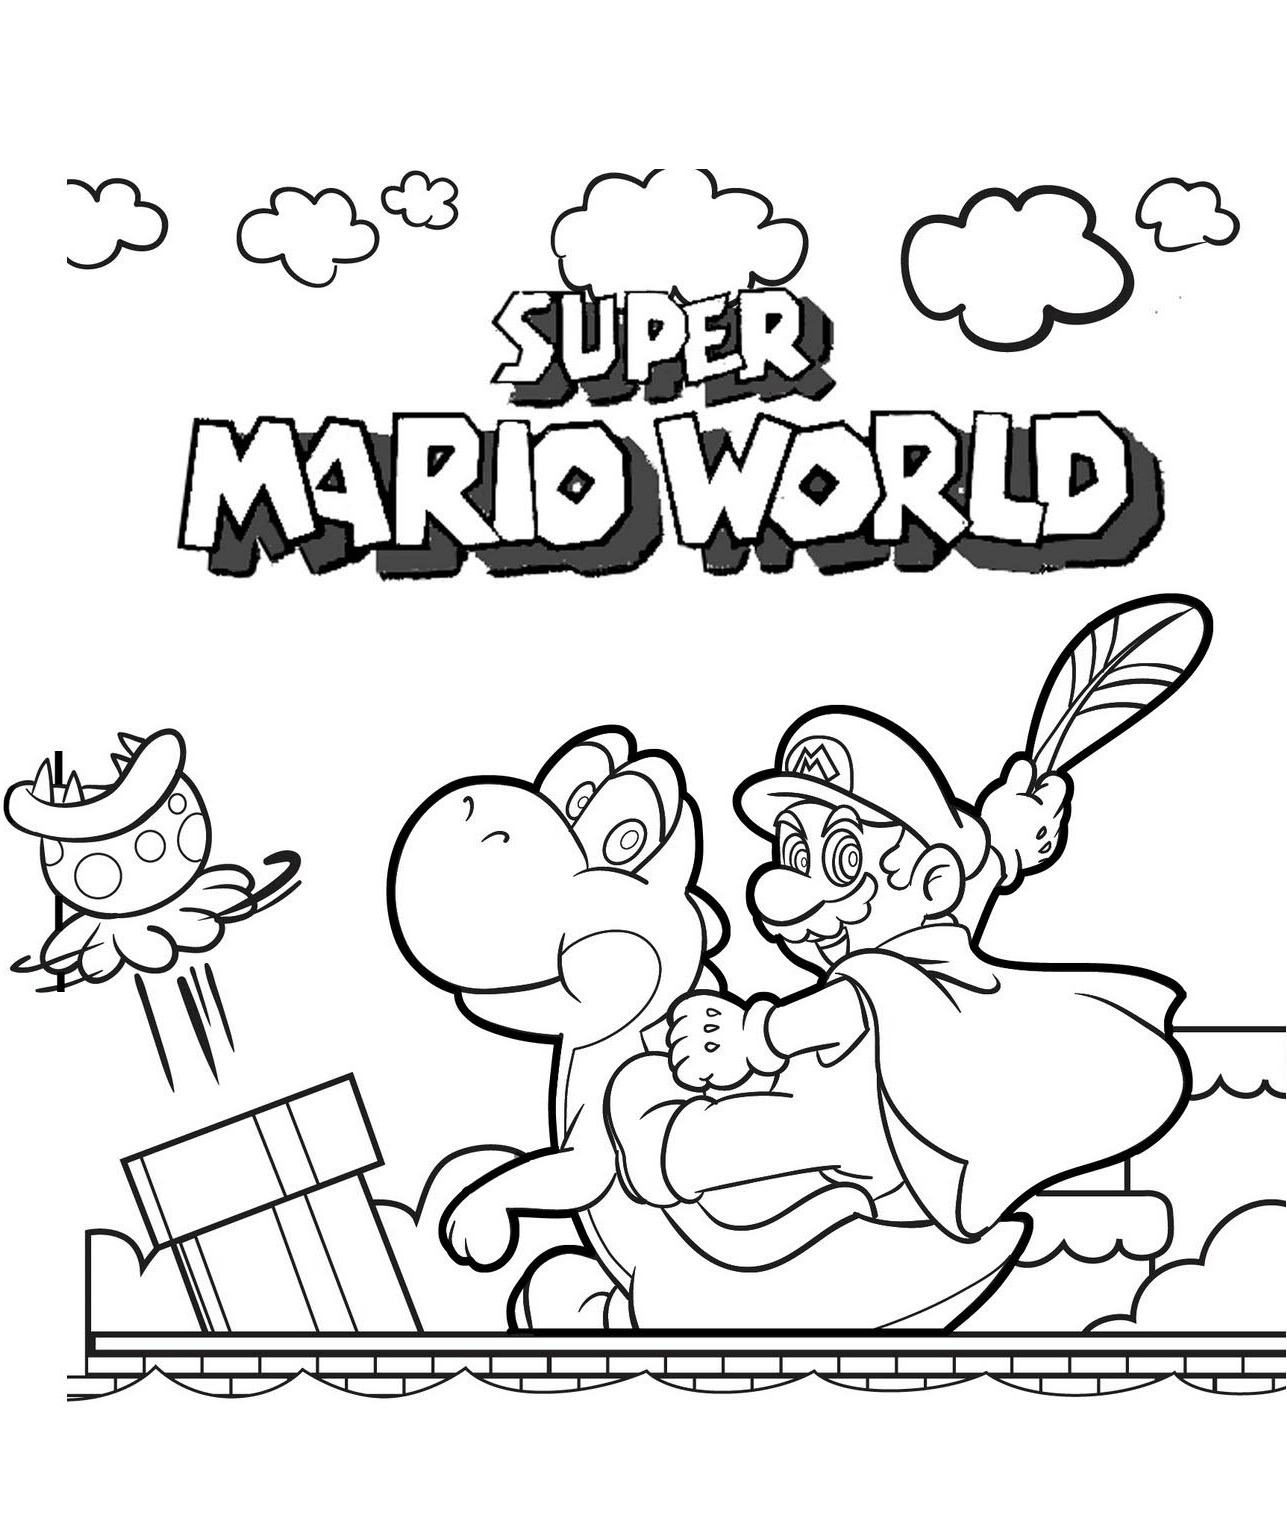 Les aventures de Super Mario World de Mario